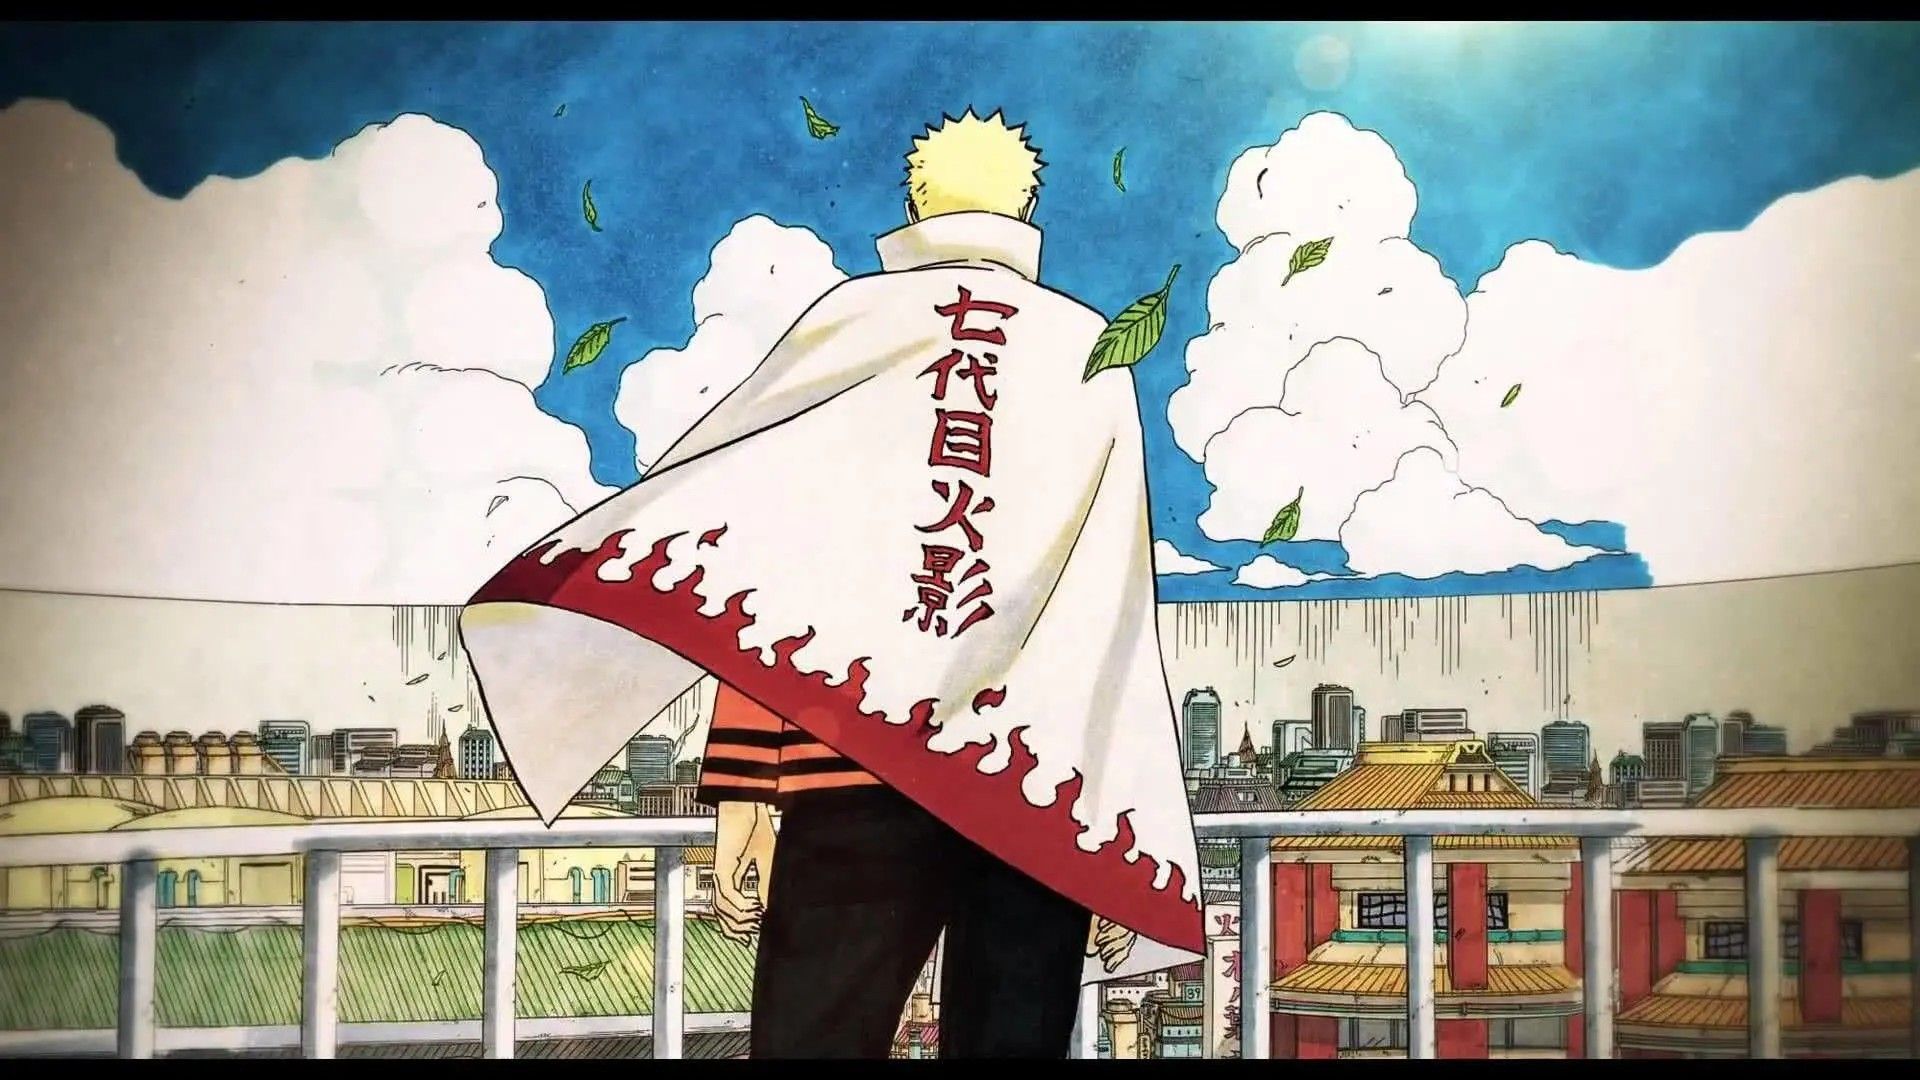 Naruto Uzumaki as Hokage